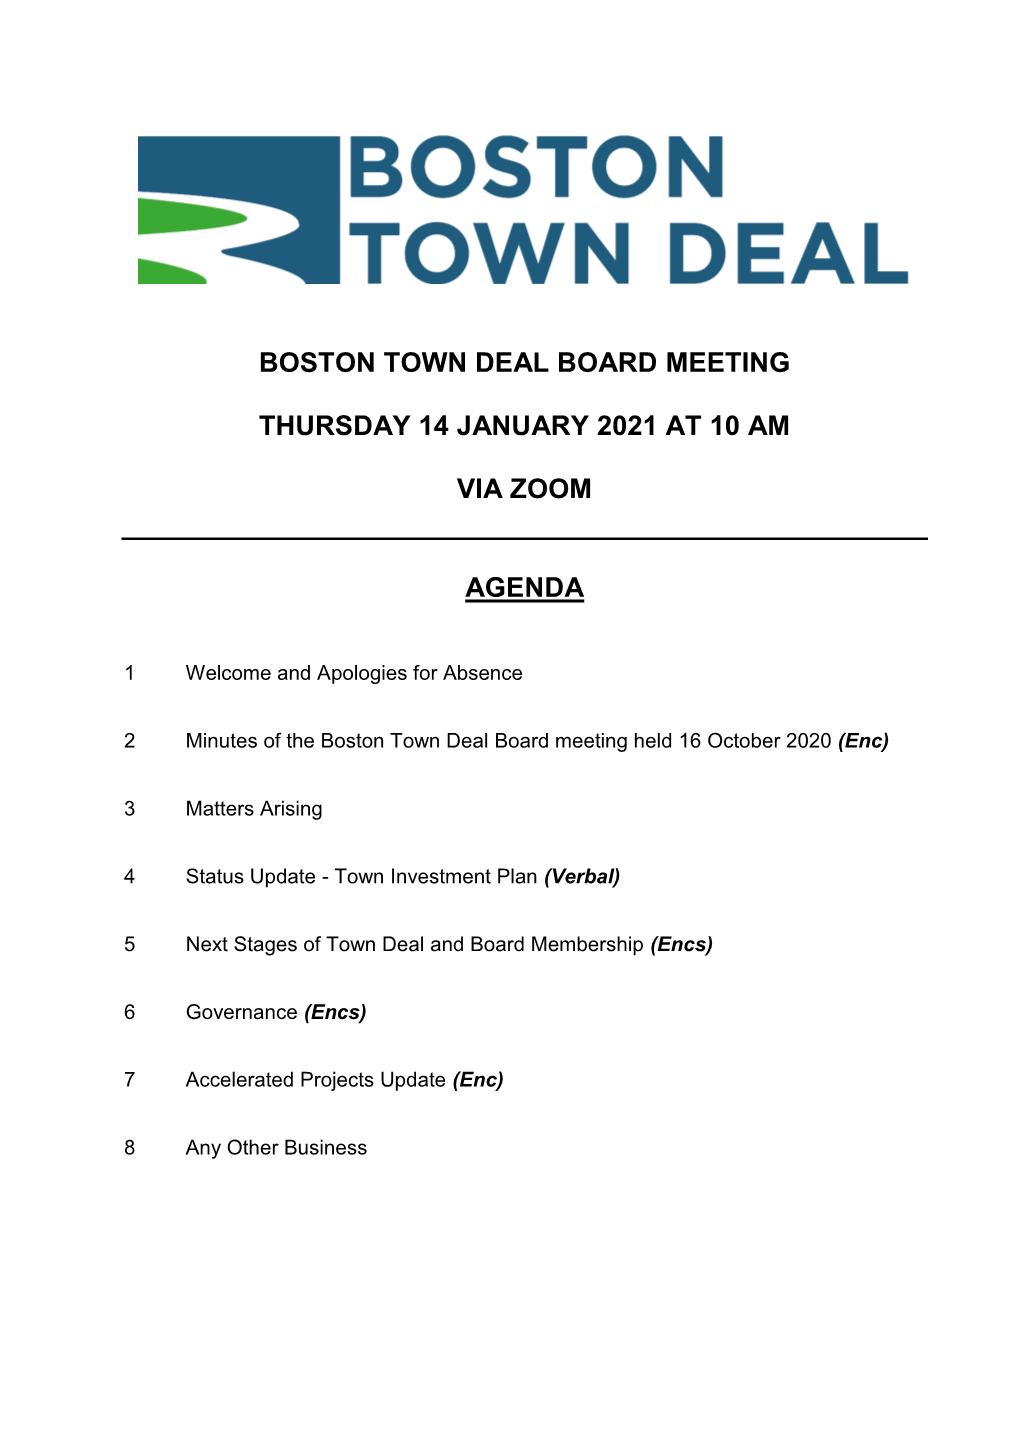 Boston Town Deal Board Meeting Thursday 14